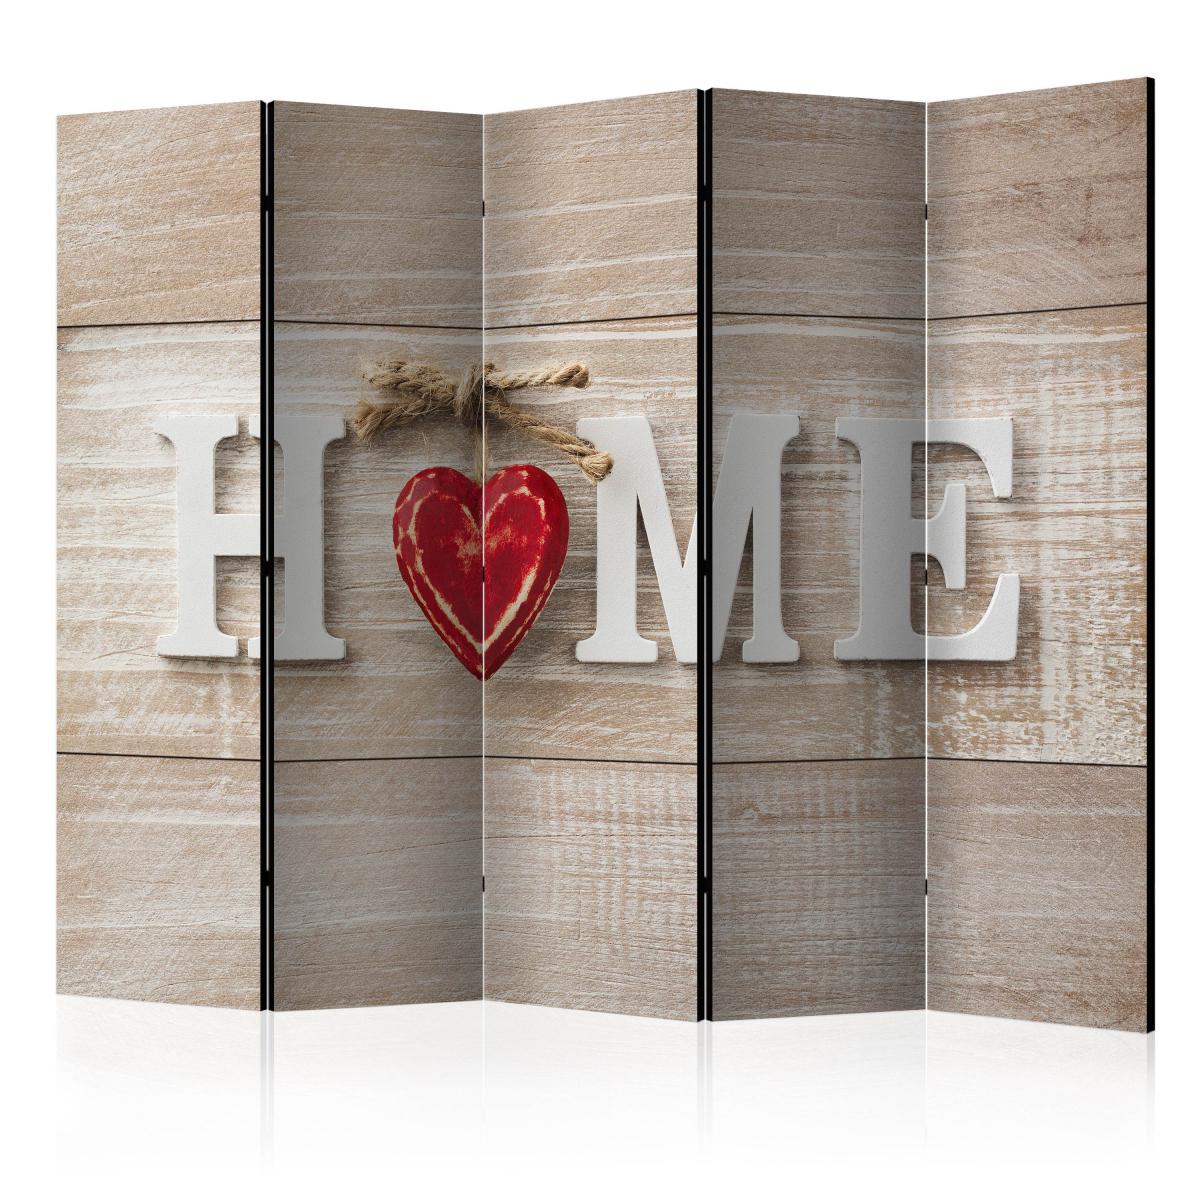 Bimago - Paravent 5 volets - Room divider - Home and red heart - Décoration, image, art | 225x172 cm | XL - Grand Format | - Cloisons